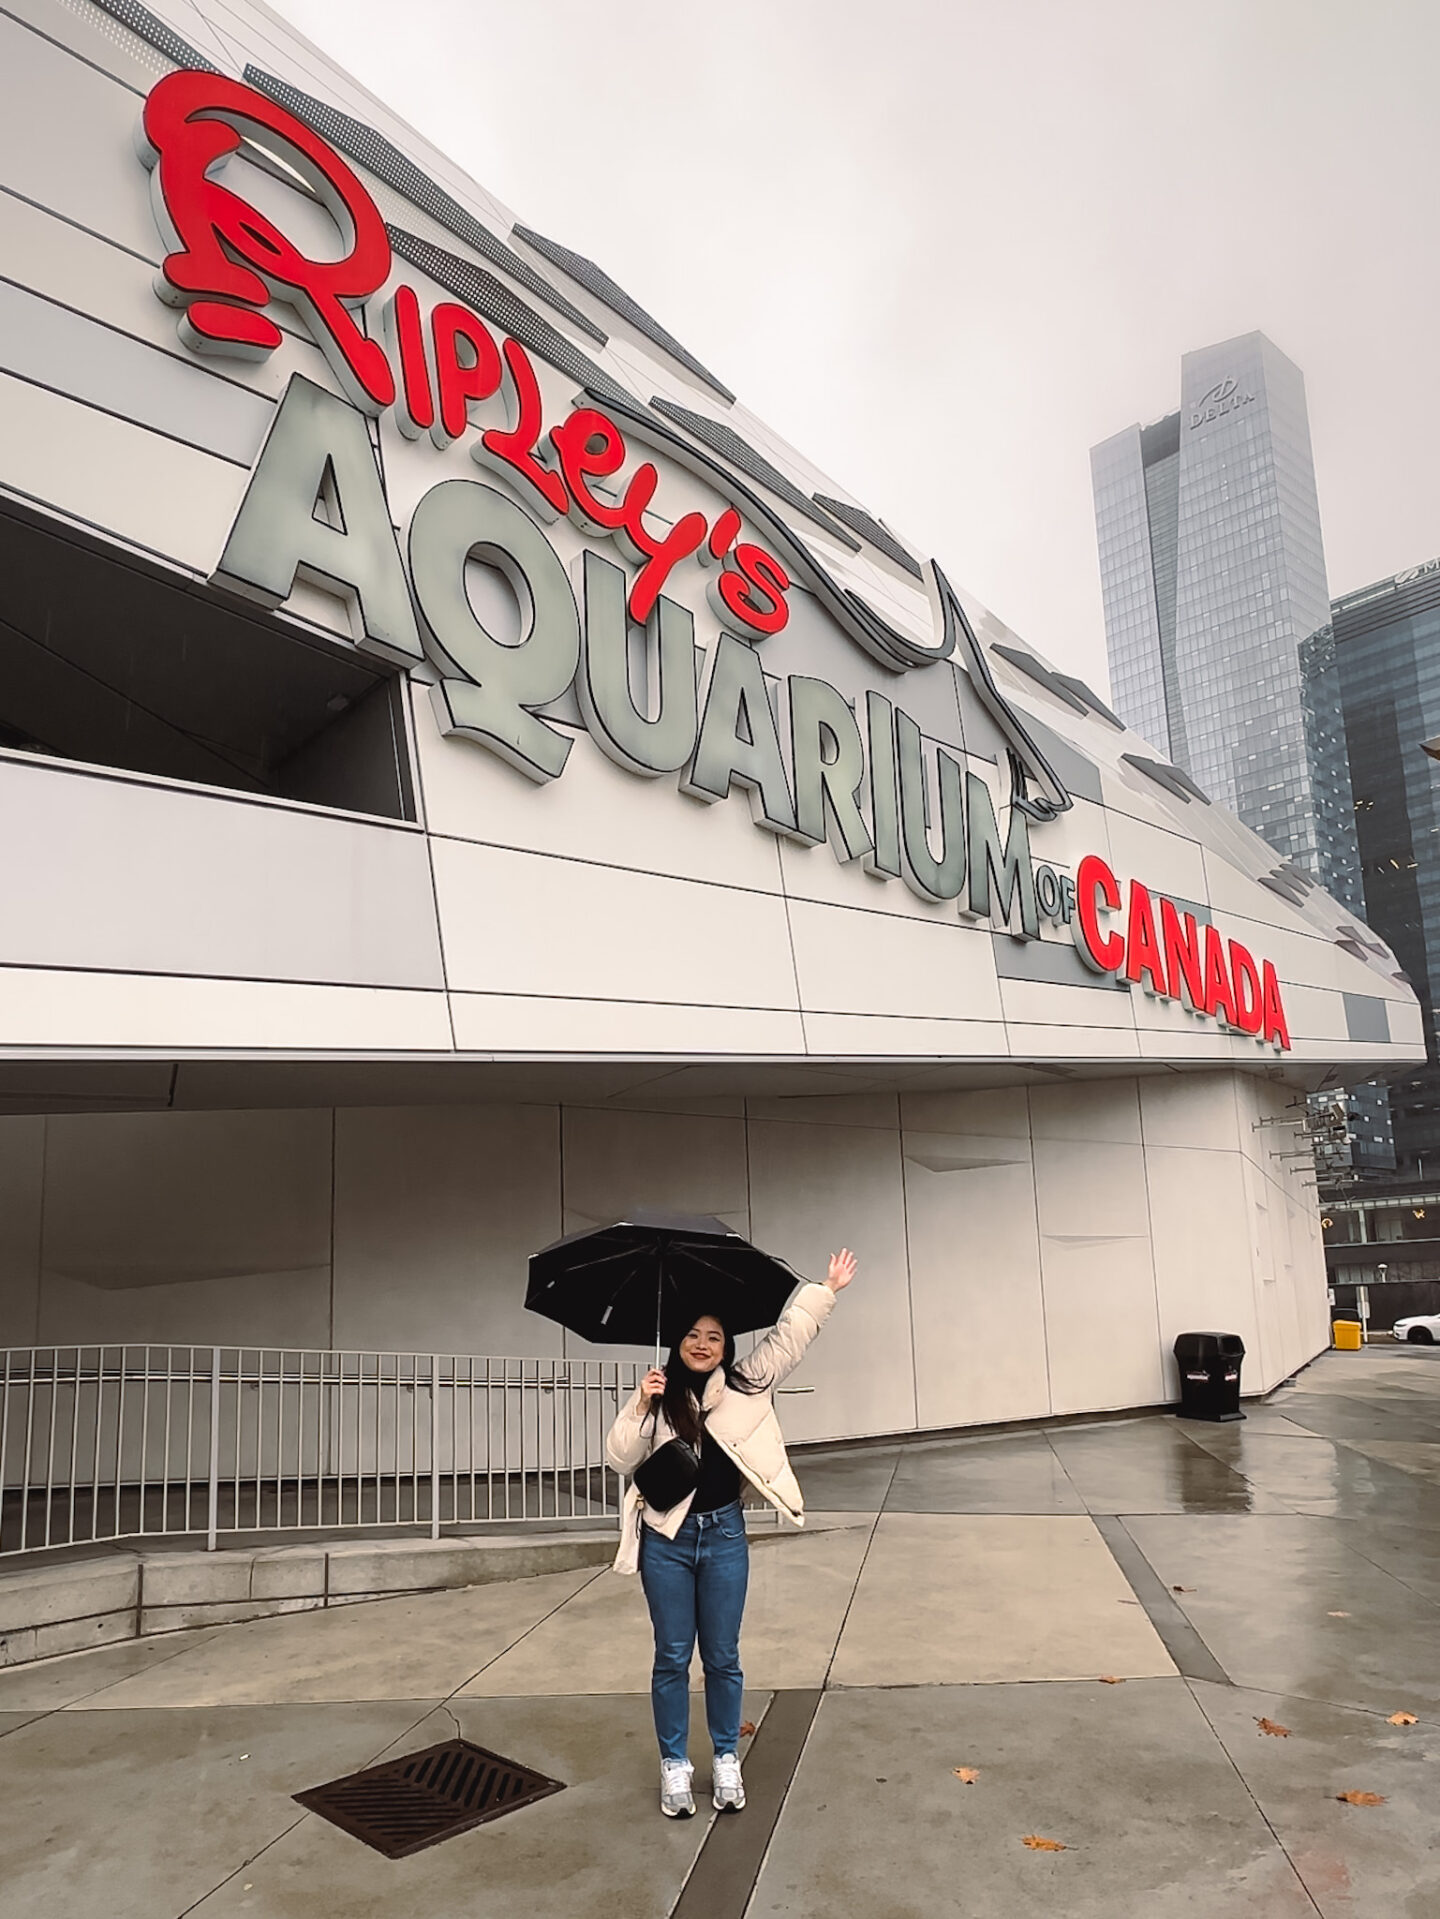 Ripley's Aquarium of Canada in Toronto